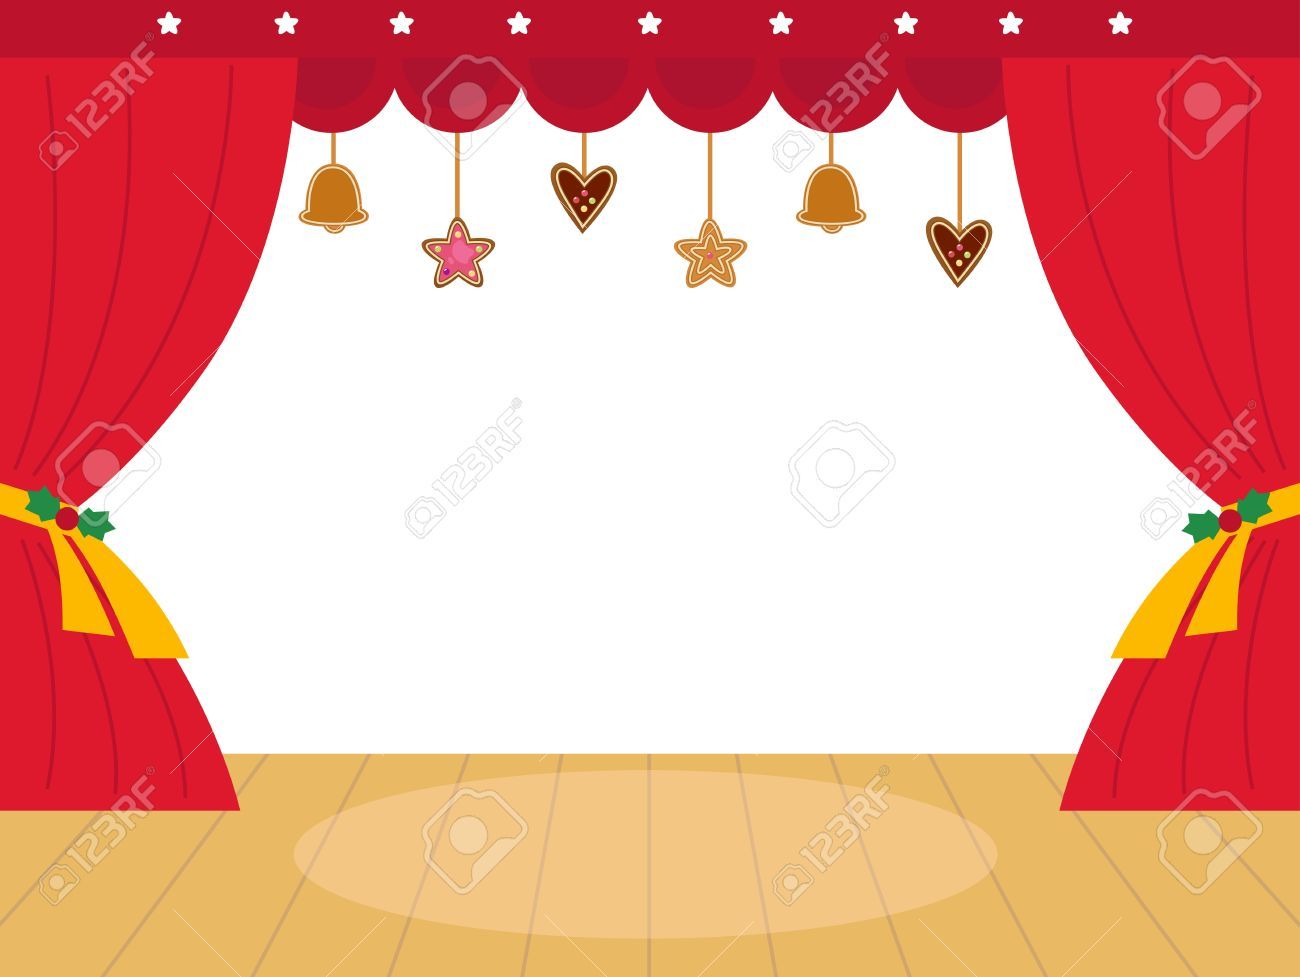 theatre clipart stage decoration